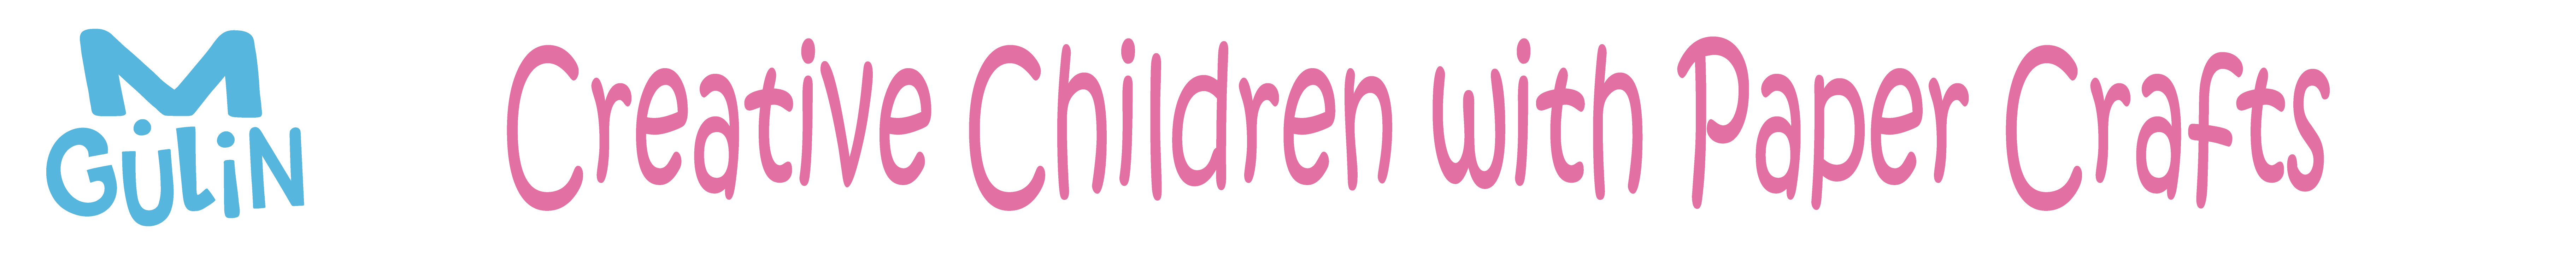 Creative Children with Paper Crafts logo